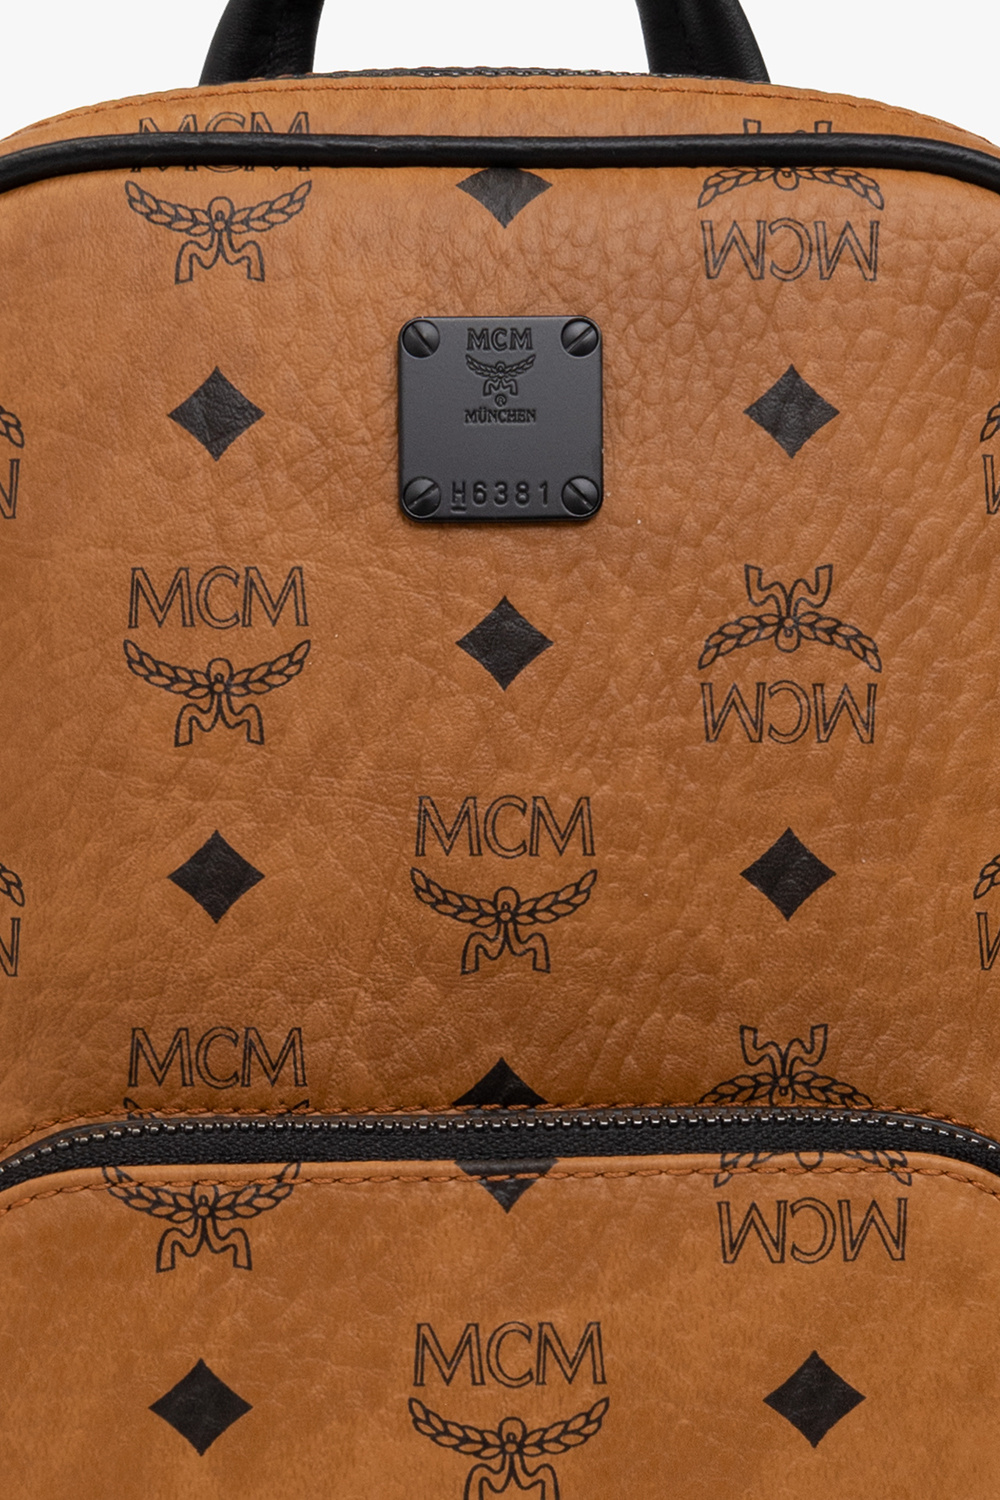 MCM - MCM Bag on Designer Wardrobe